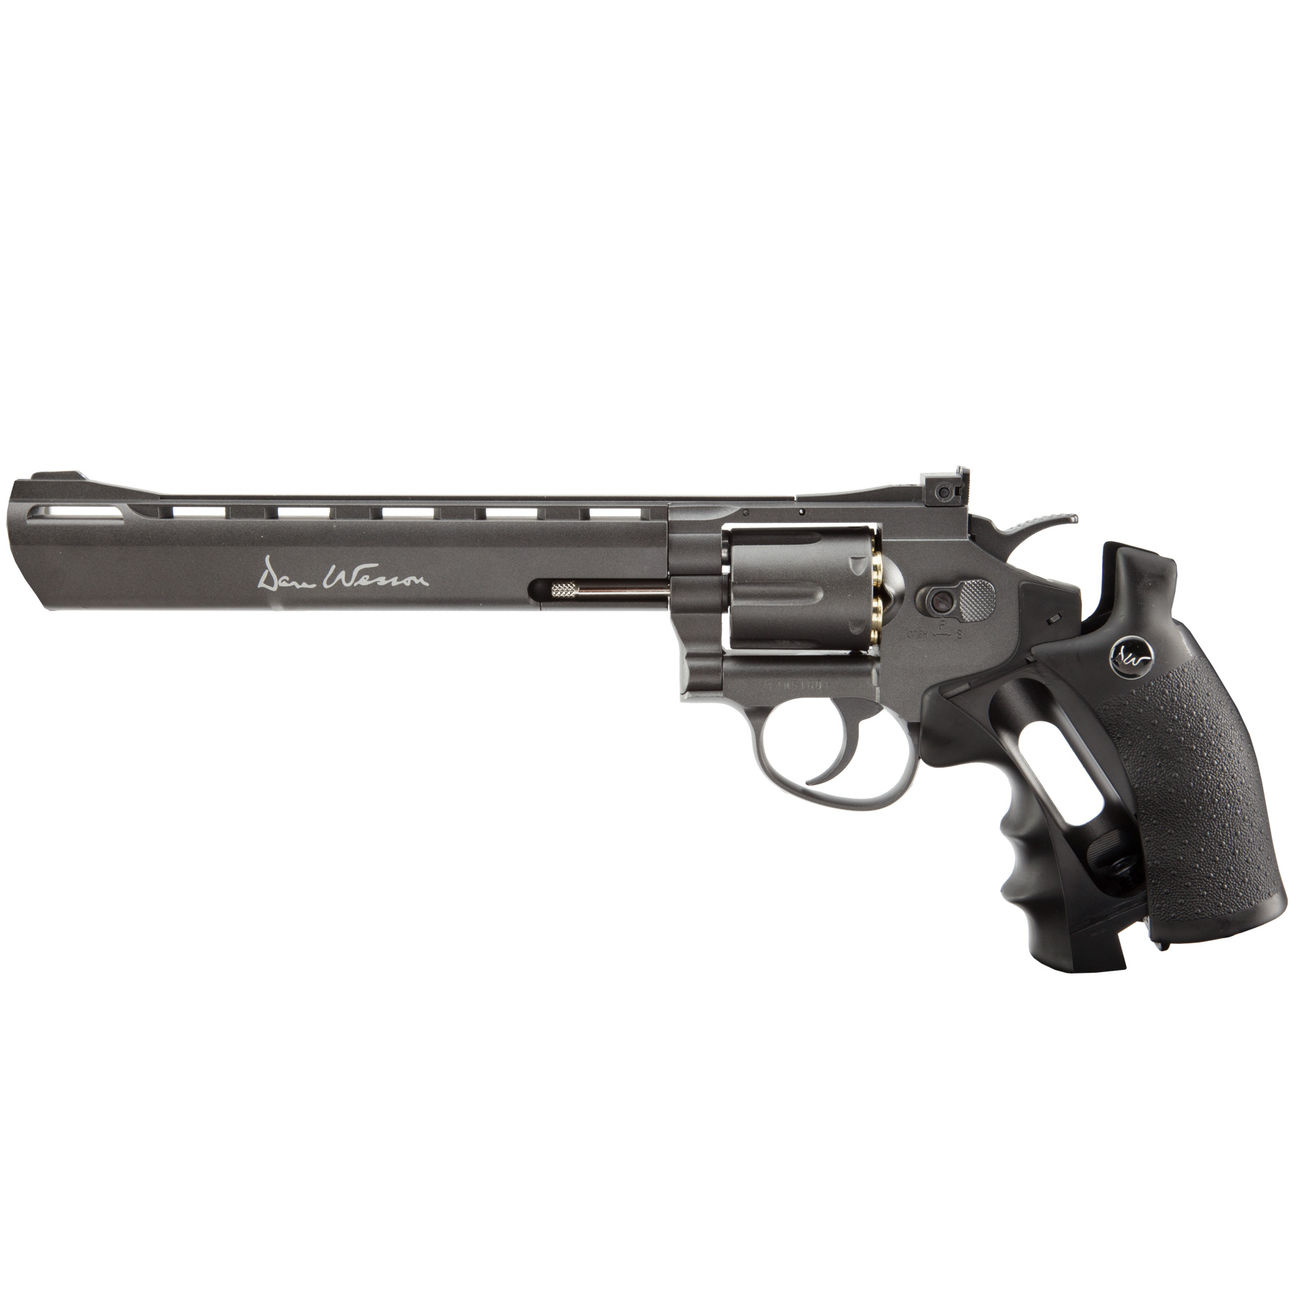 ASG 8 Zoll Dan Wesson Revolver Co2 NBB  2,70 Joule - BK